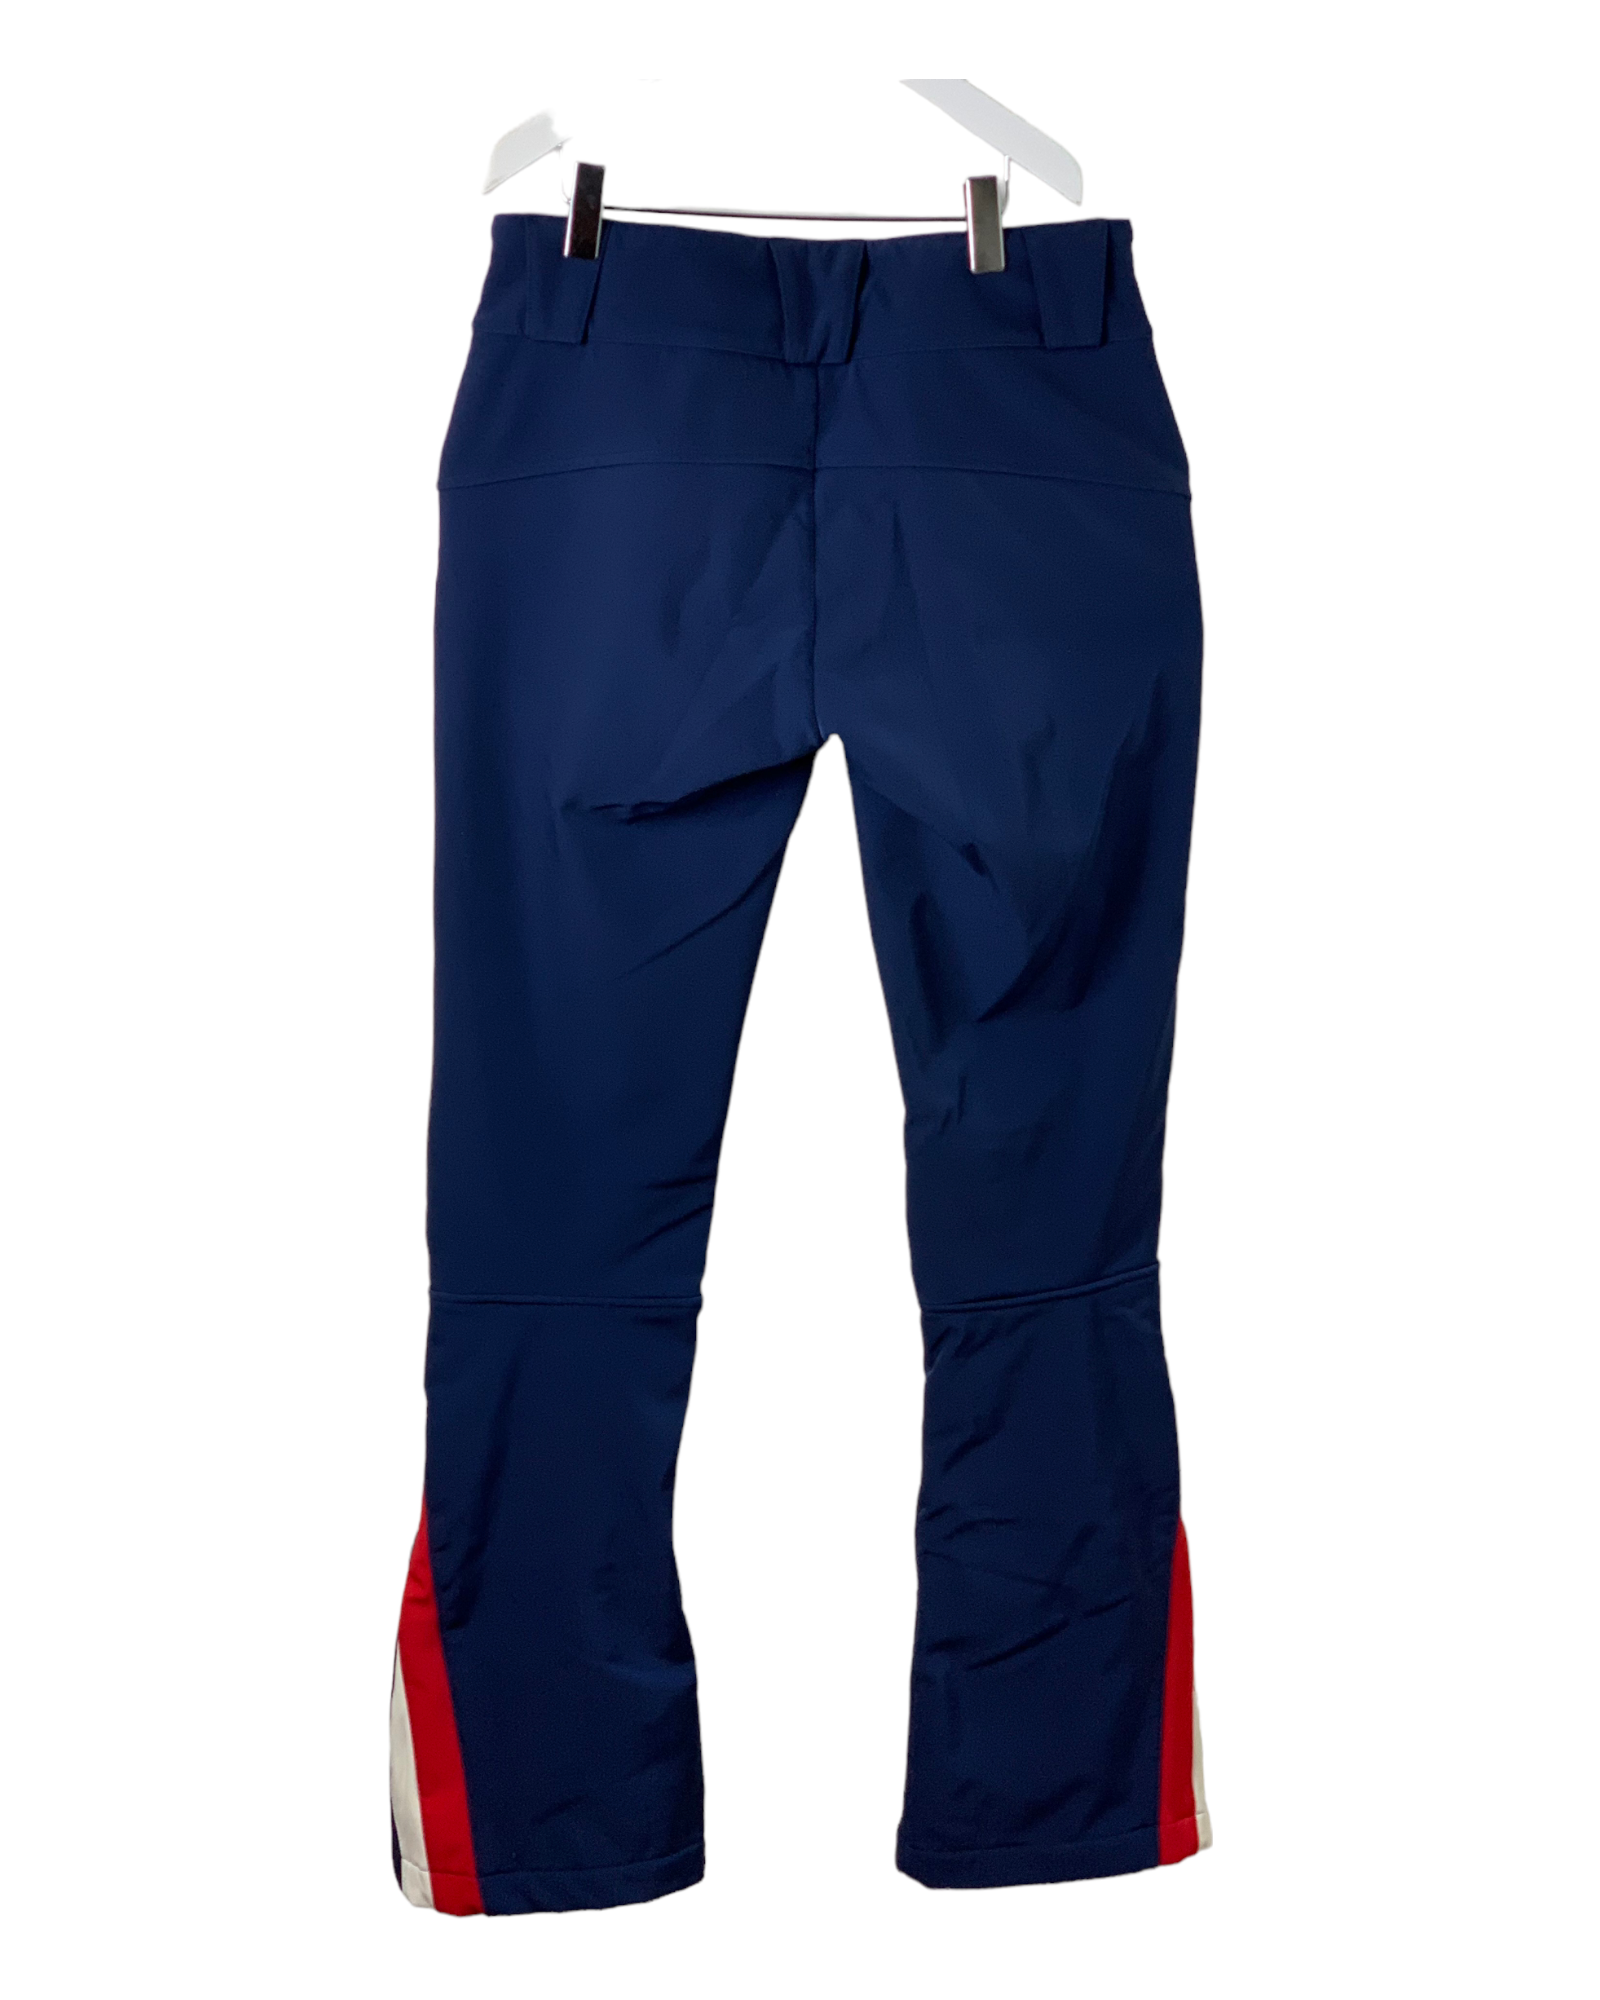 Pantalon ski Femme bleu PERFECT MOMENT taille S (36/38) -  Little.Clotherie.Family